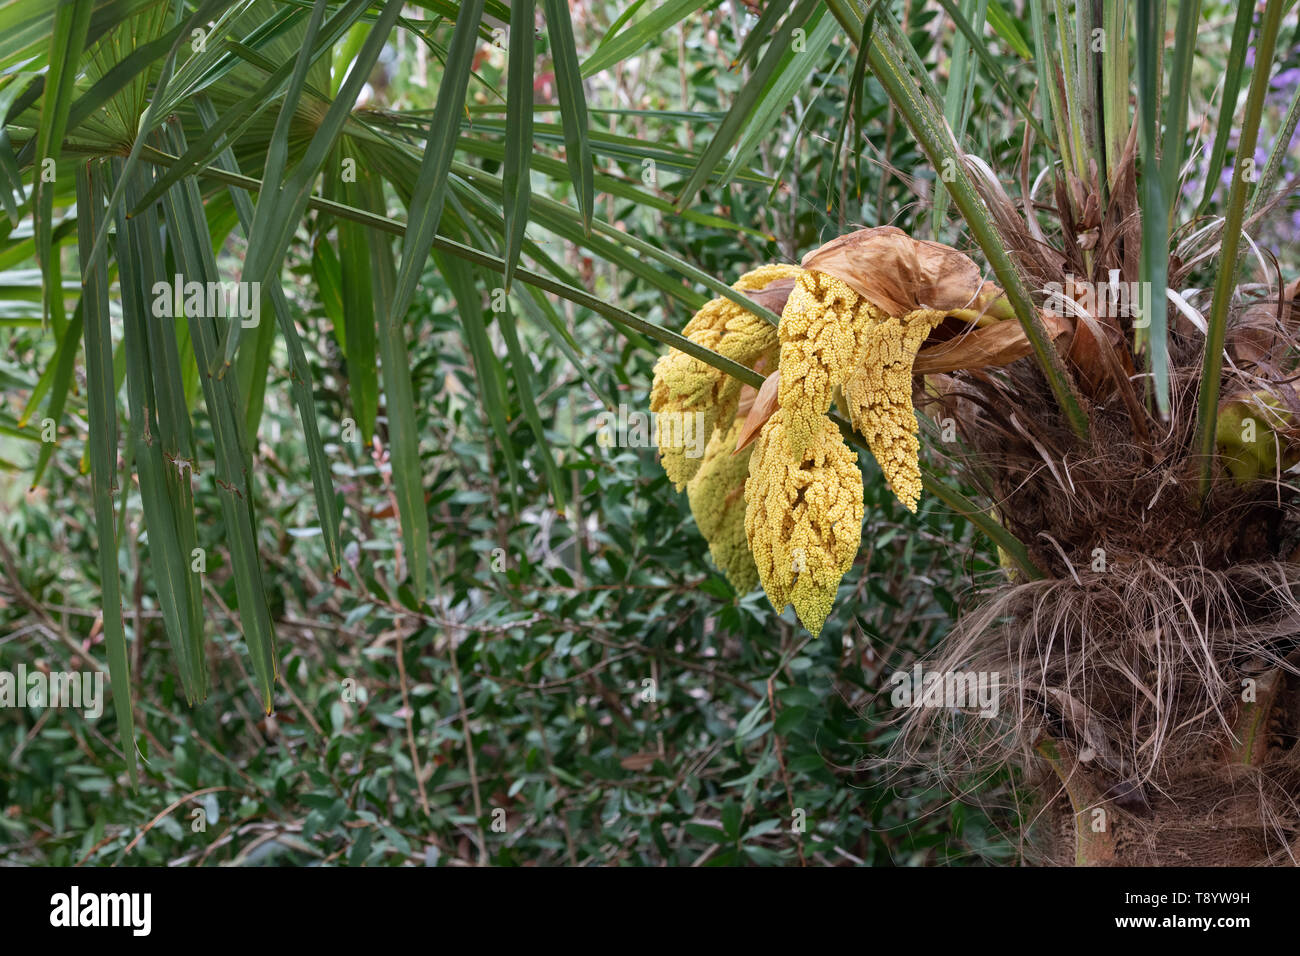 Trachycarpus fortunei. Chusan palm tree beginning to flower in spring. UK Stock Photo